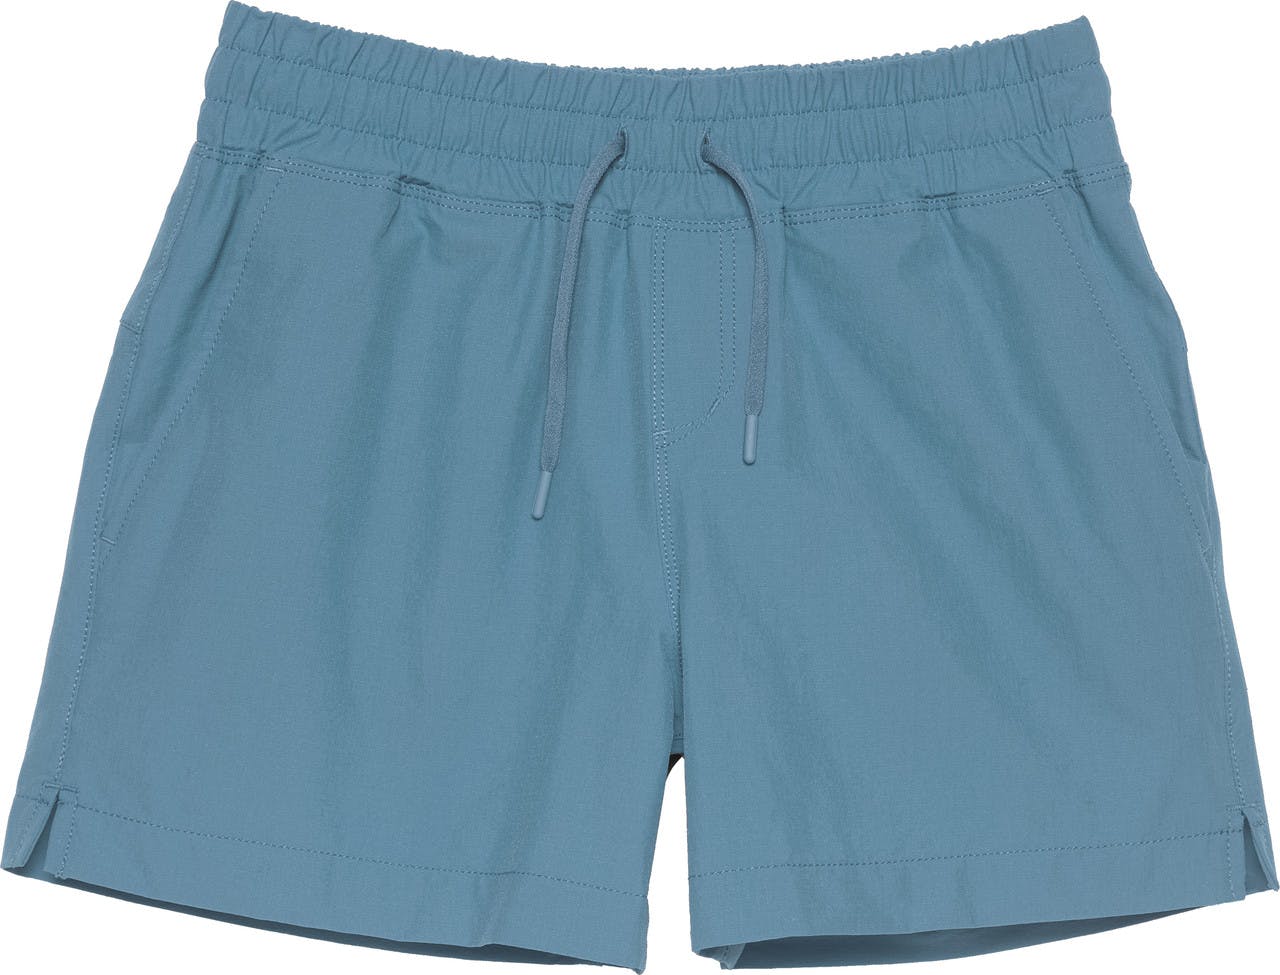 Wanderwall Shorts Vintage Blue